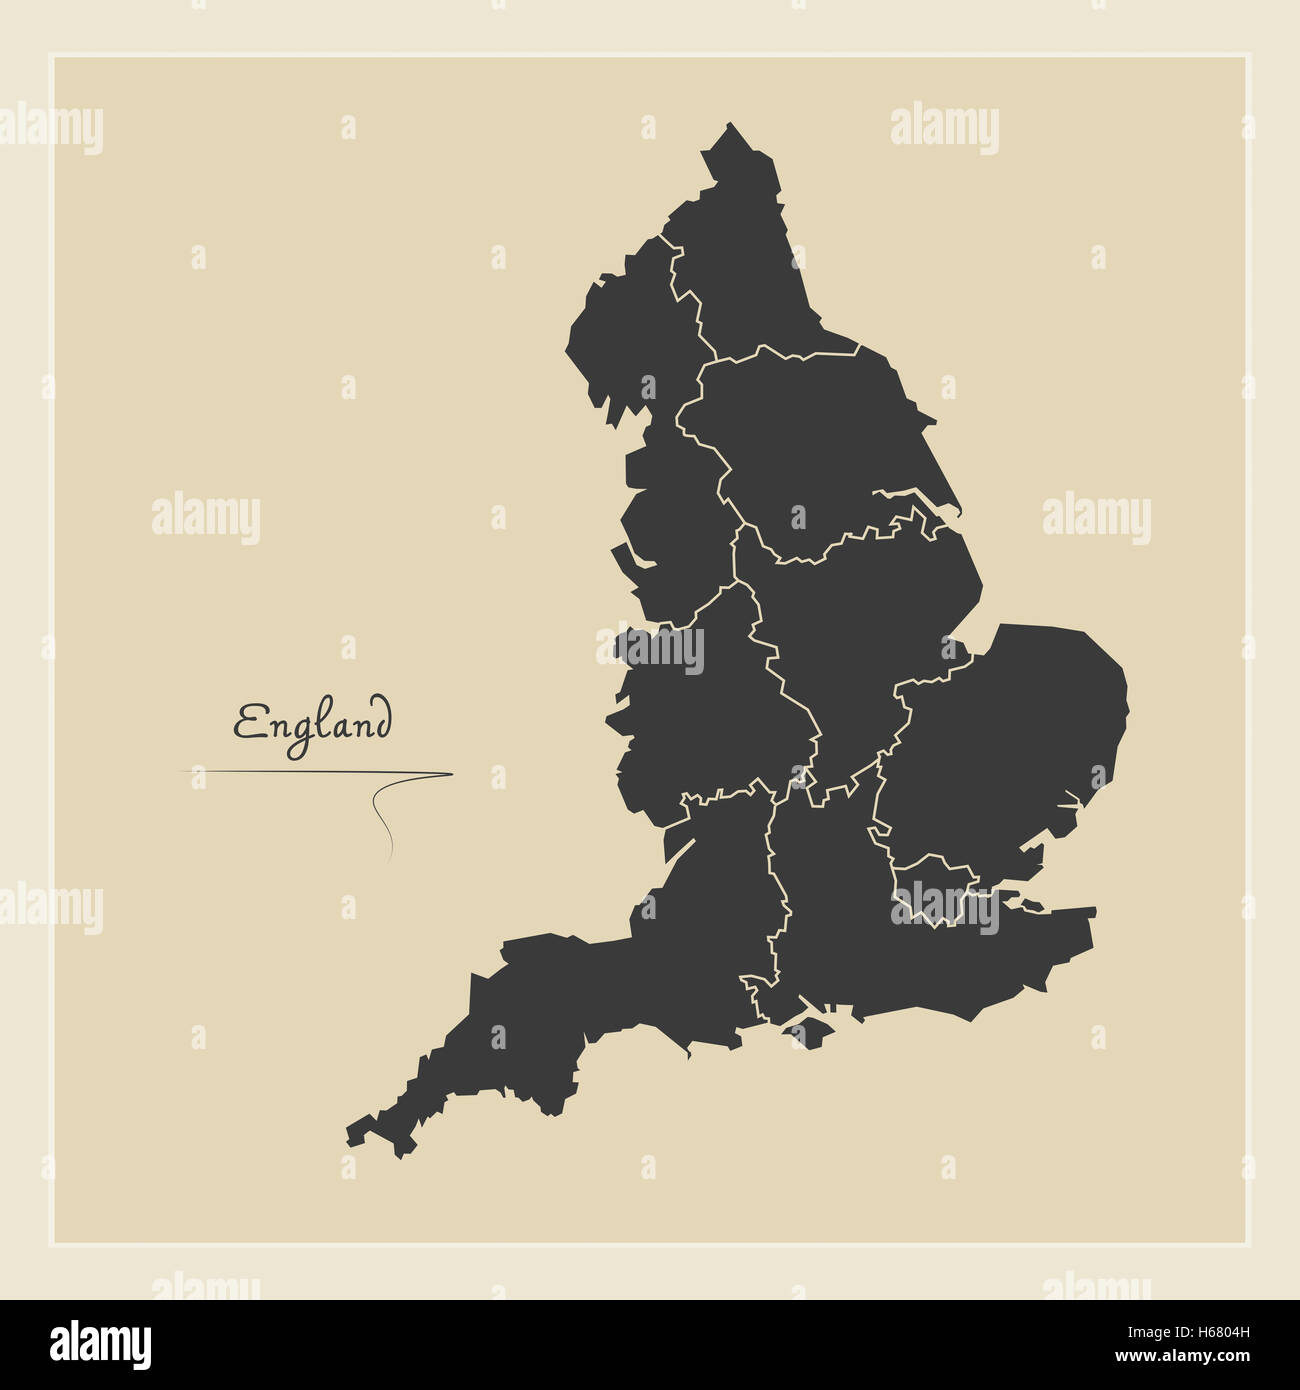 England map artwork black color illustration Stock Photo